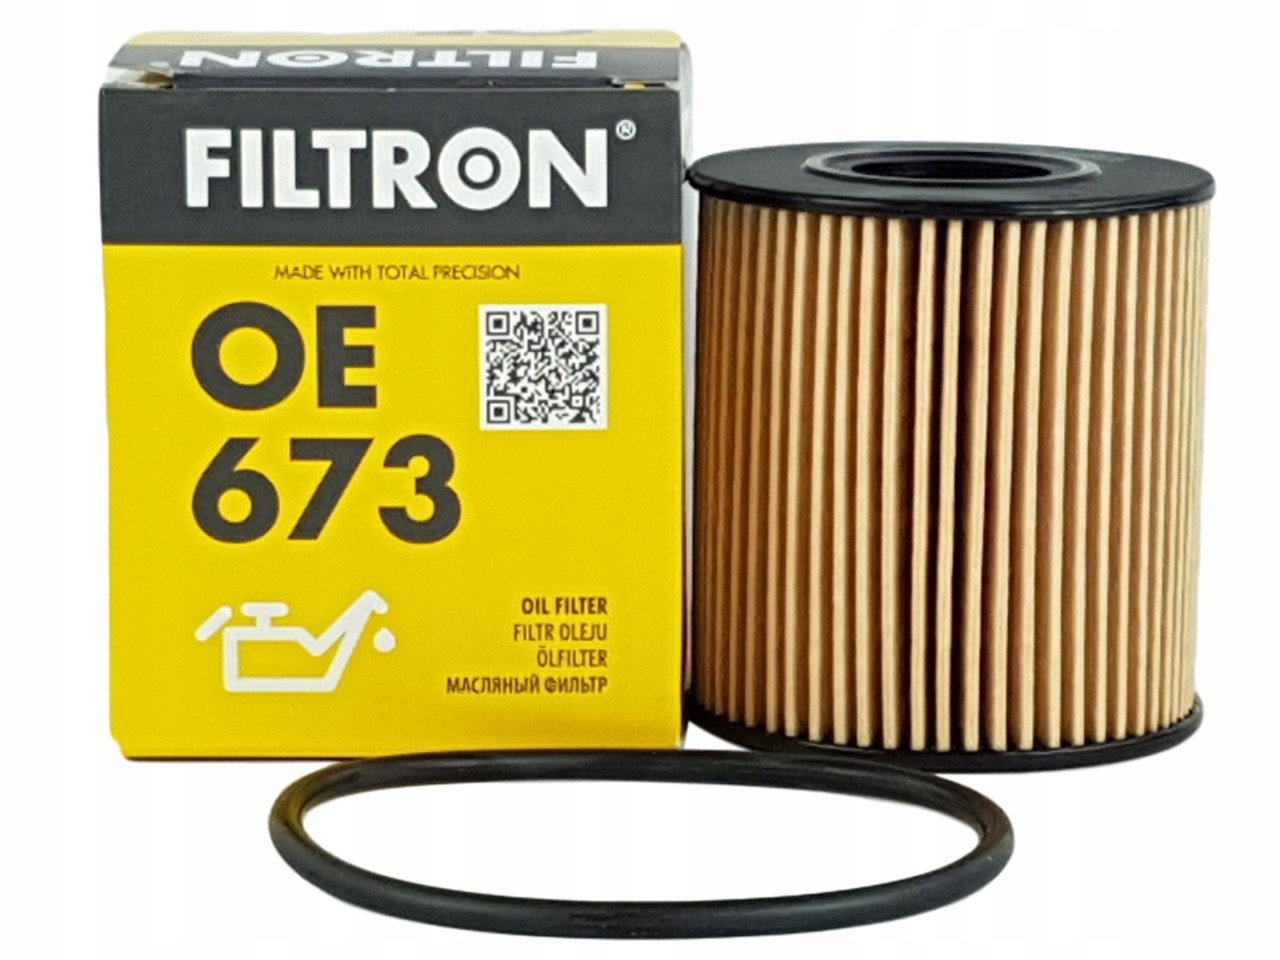 Citroen C3 1.4 1.6 Benzinli Yağ Filtresi Filtron Marka